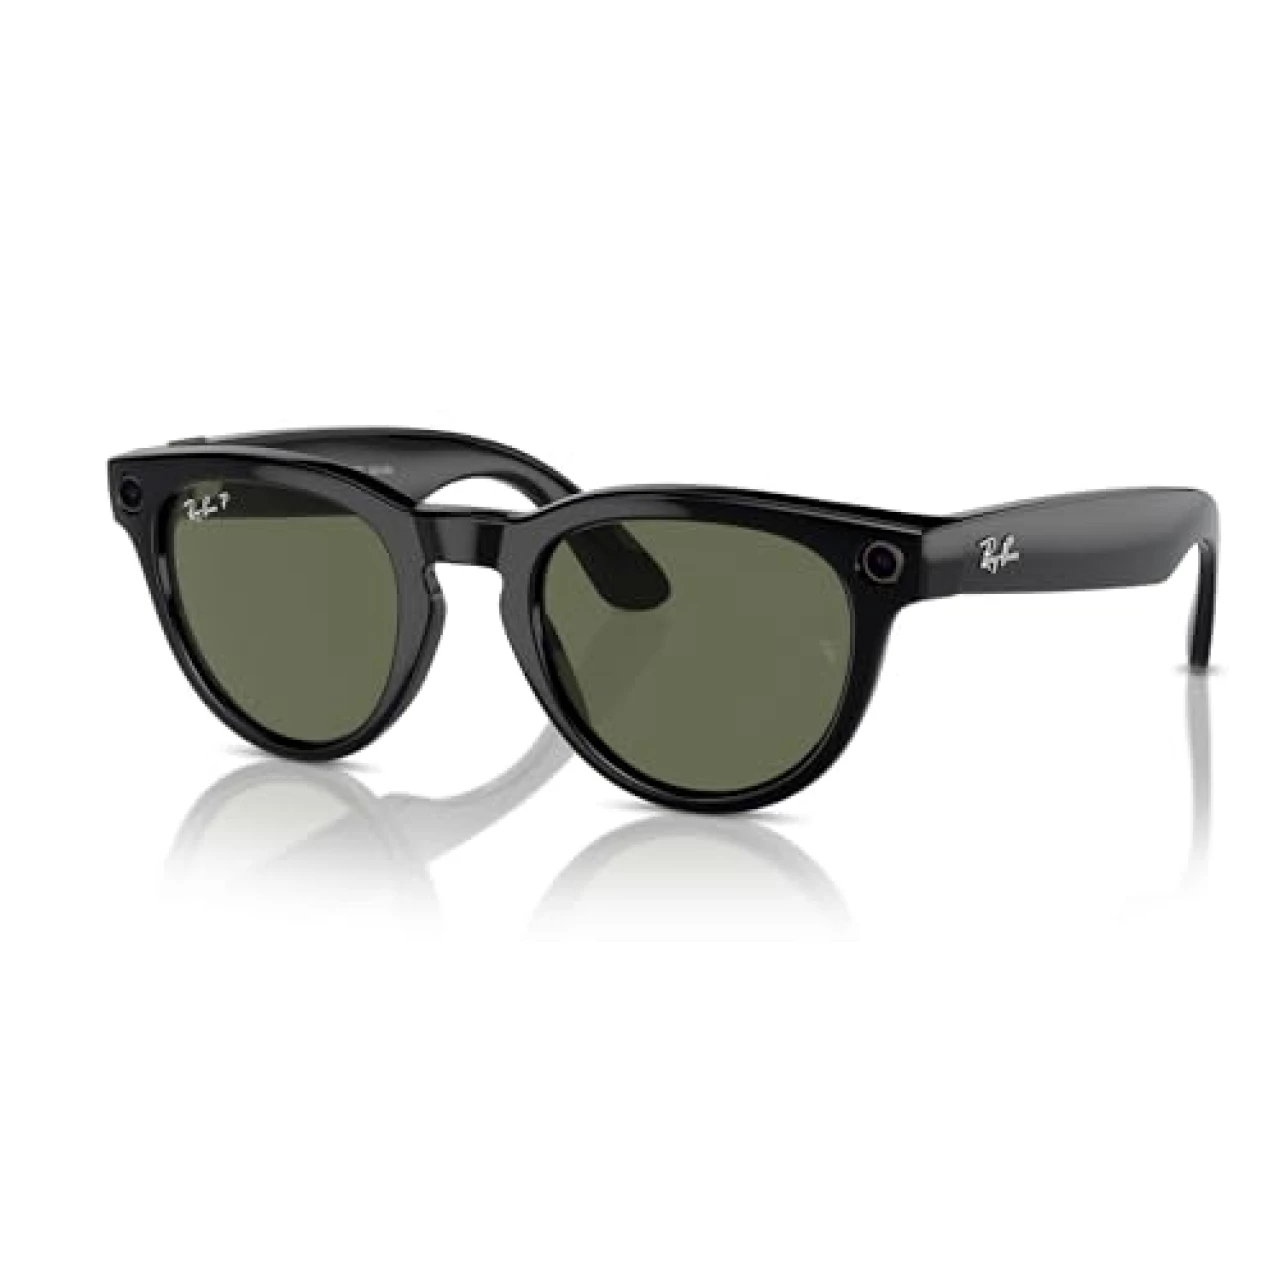 Ray-Ban Meta - Headliner (Standard) Smart Glasses - Shiny Black, Polarized G15 Green